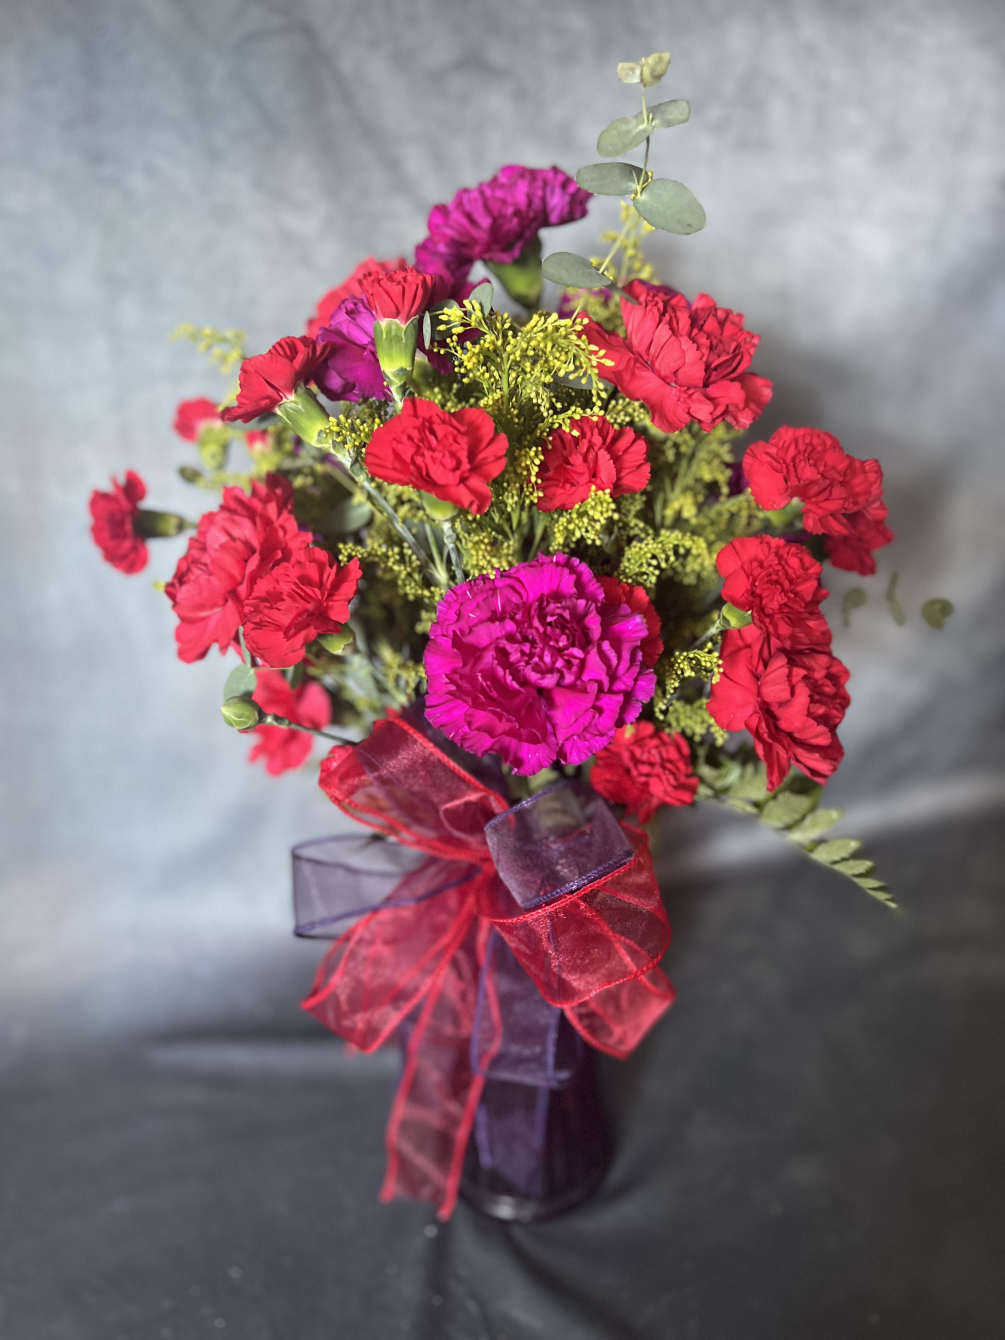 Our Stunning Arrangement Magenta Blooms will definitely make their day!

The gorgeous arrangement